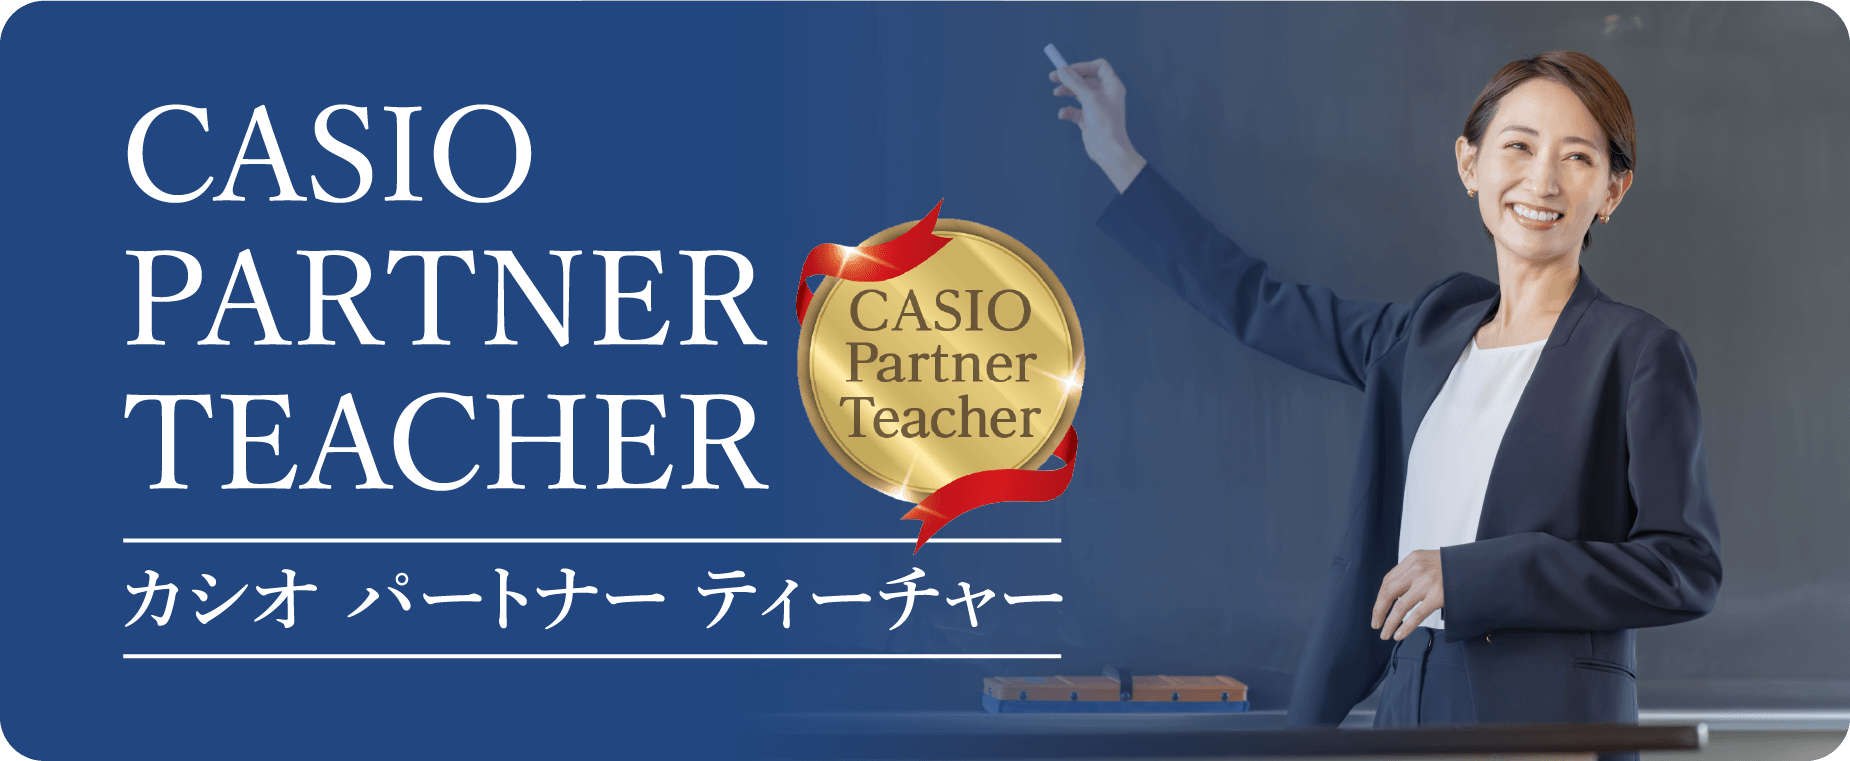 CASIO PARTNER TEACHER